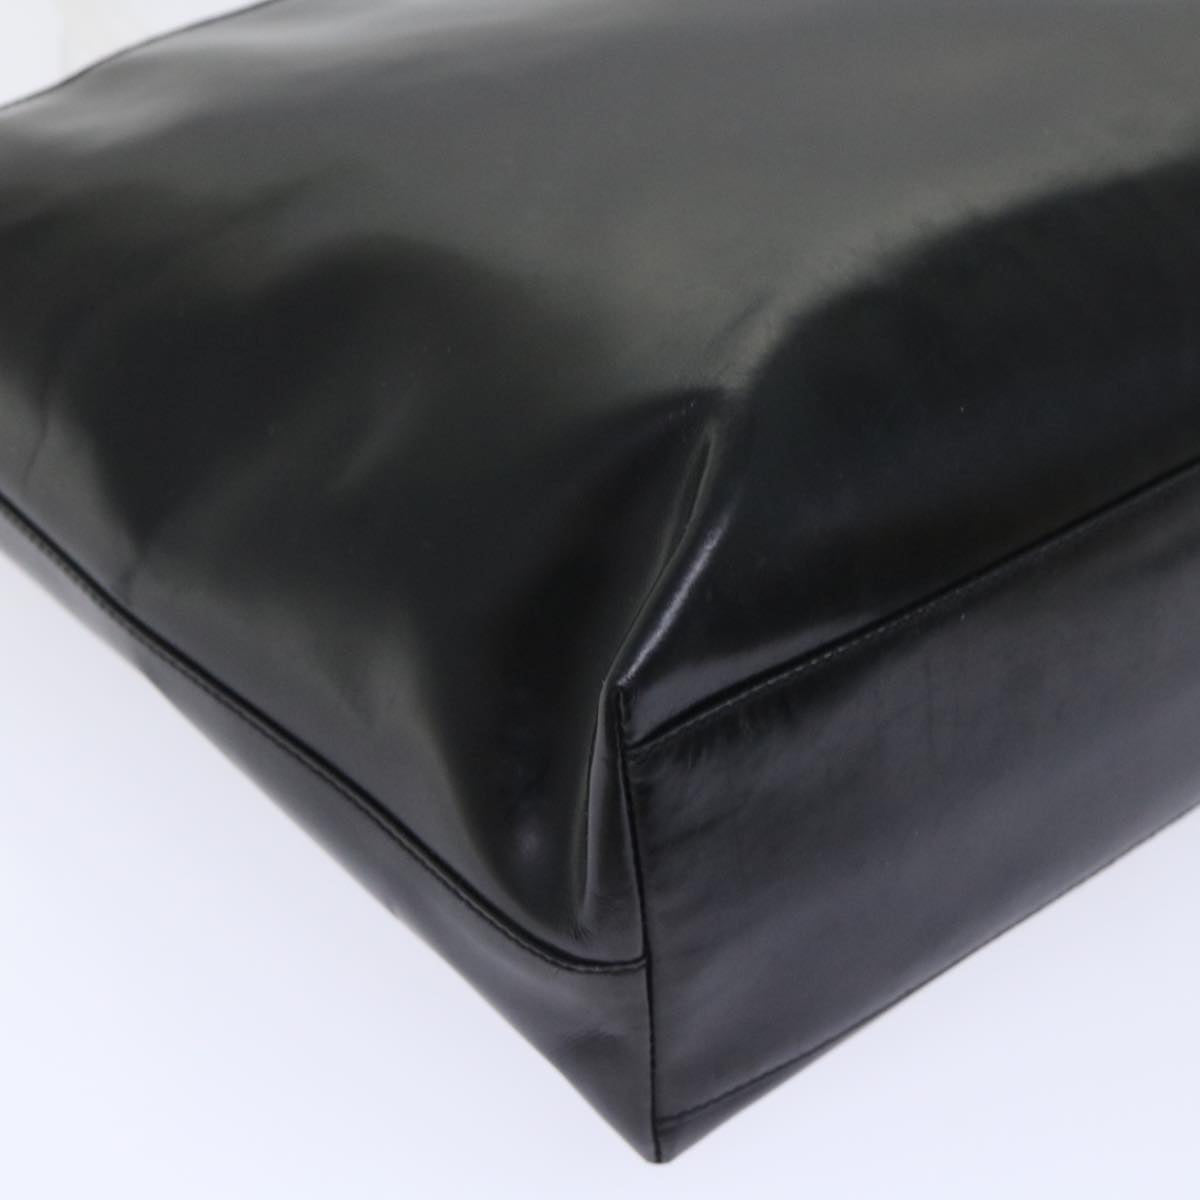 PRADA Hand Bag Patent leather Black Clear Auth fm2716